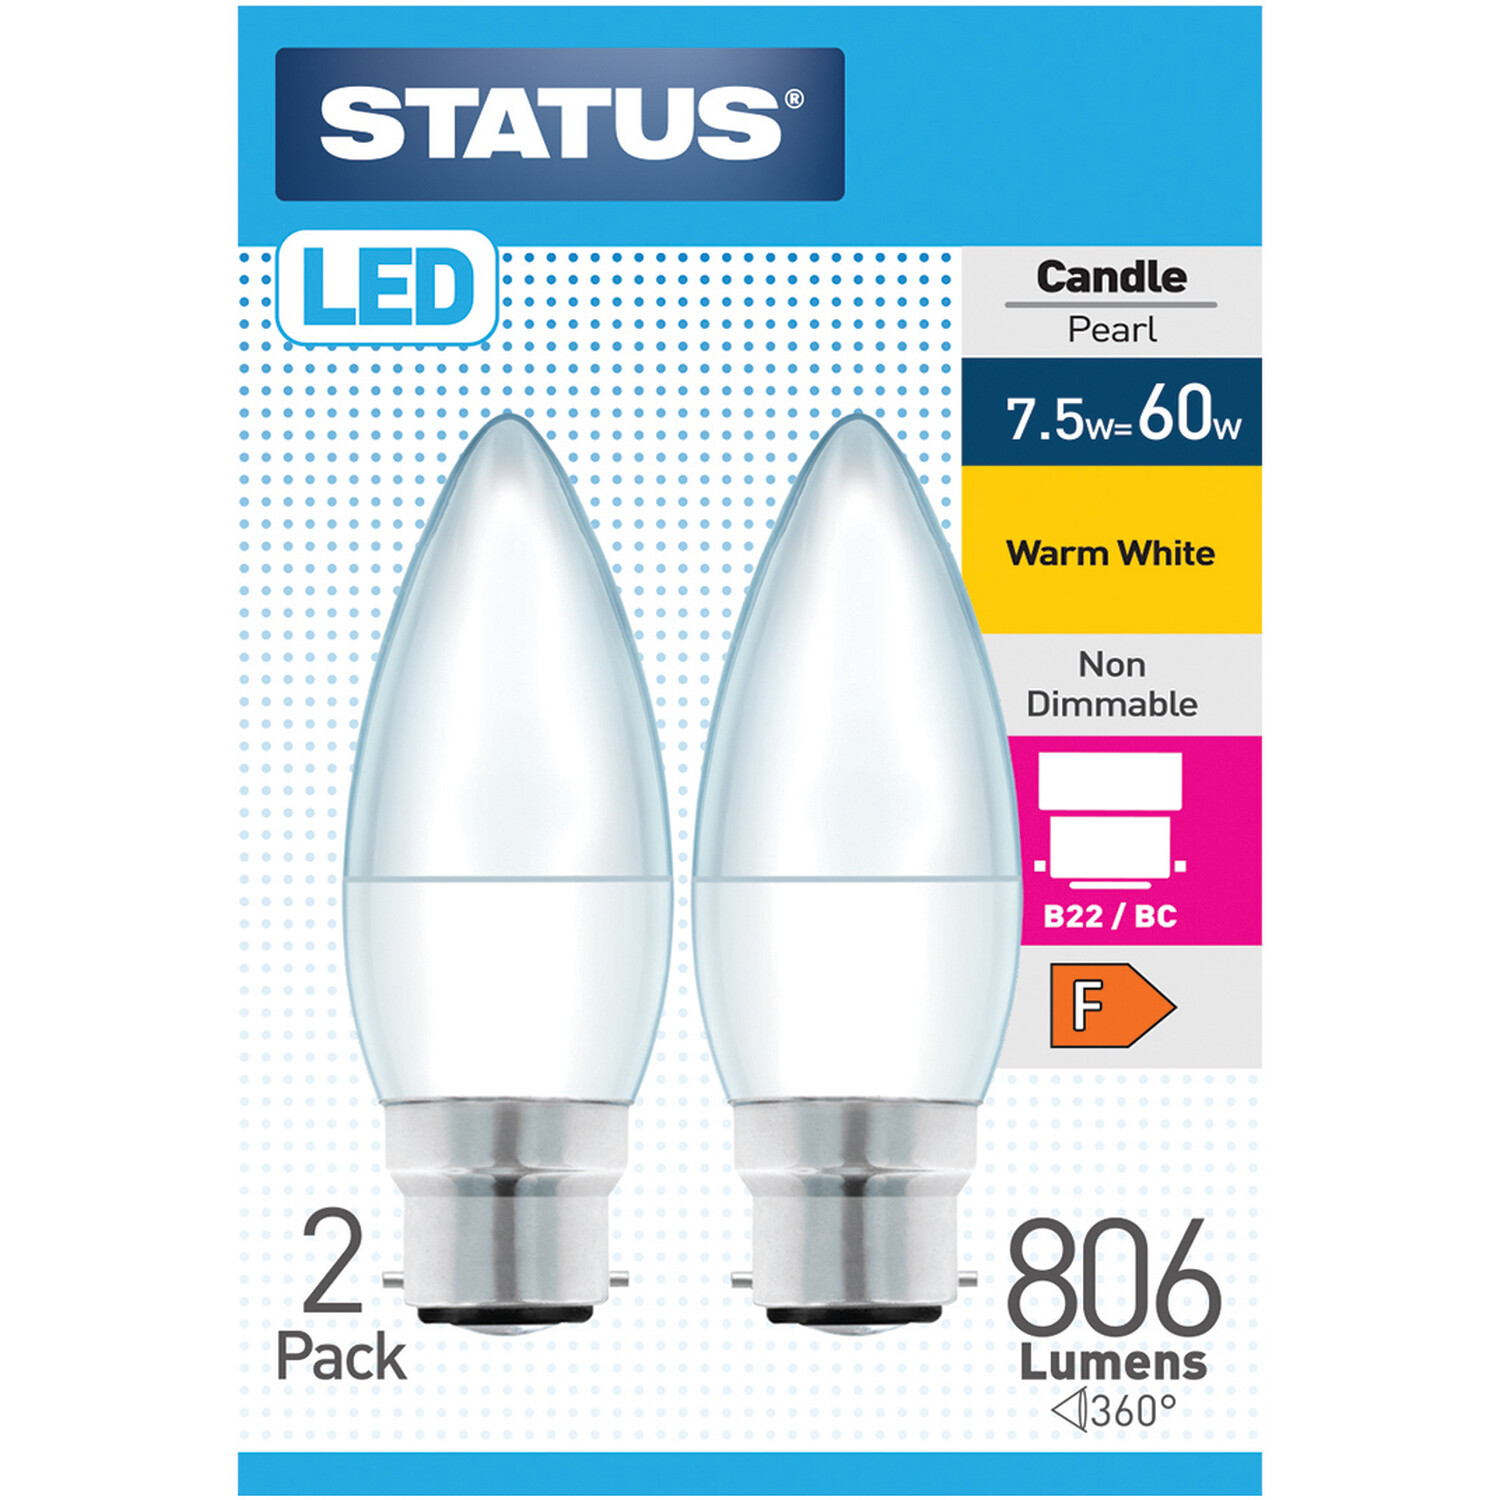 Pack of 2 Status LED 7.5W Candle Pearl Lightbulbs - Bayonet Cap / BC Image 1